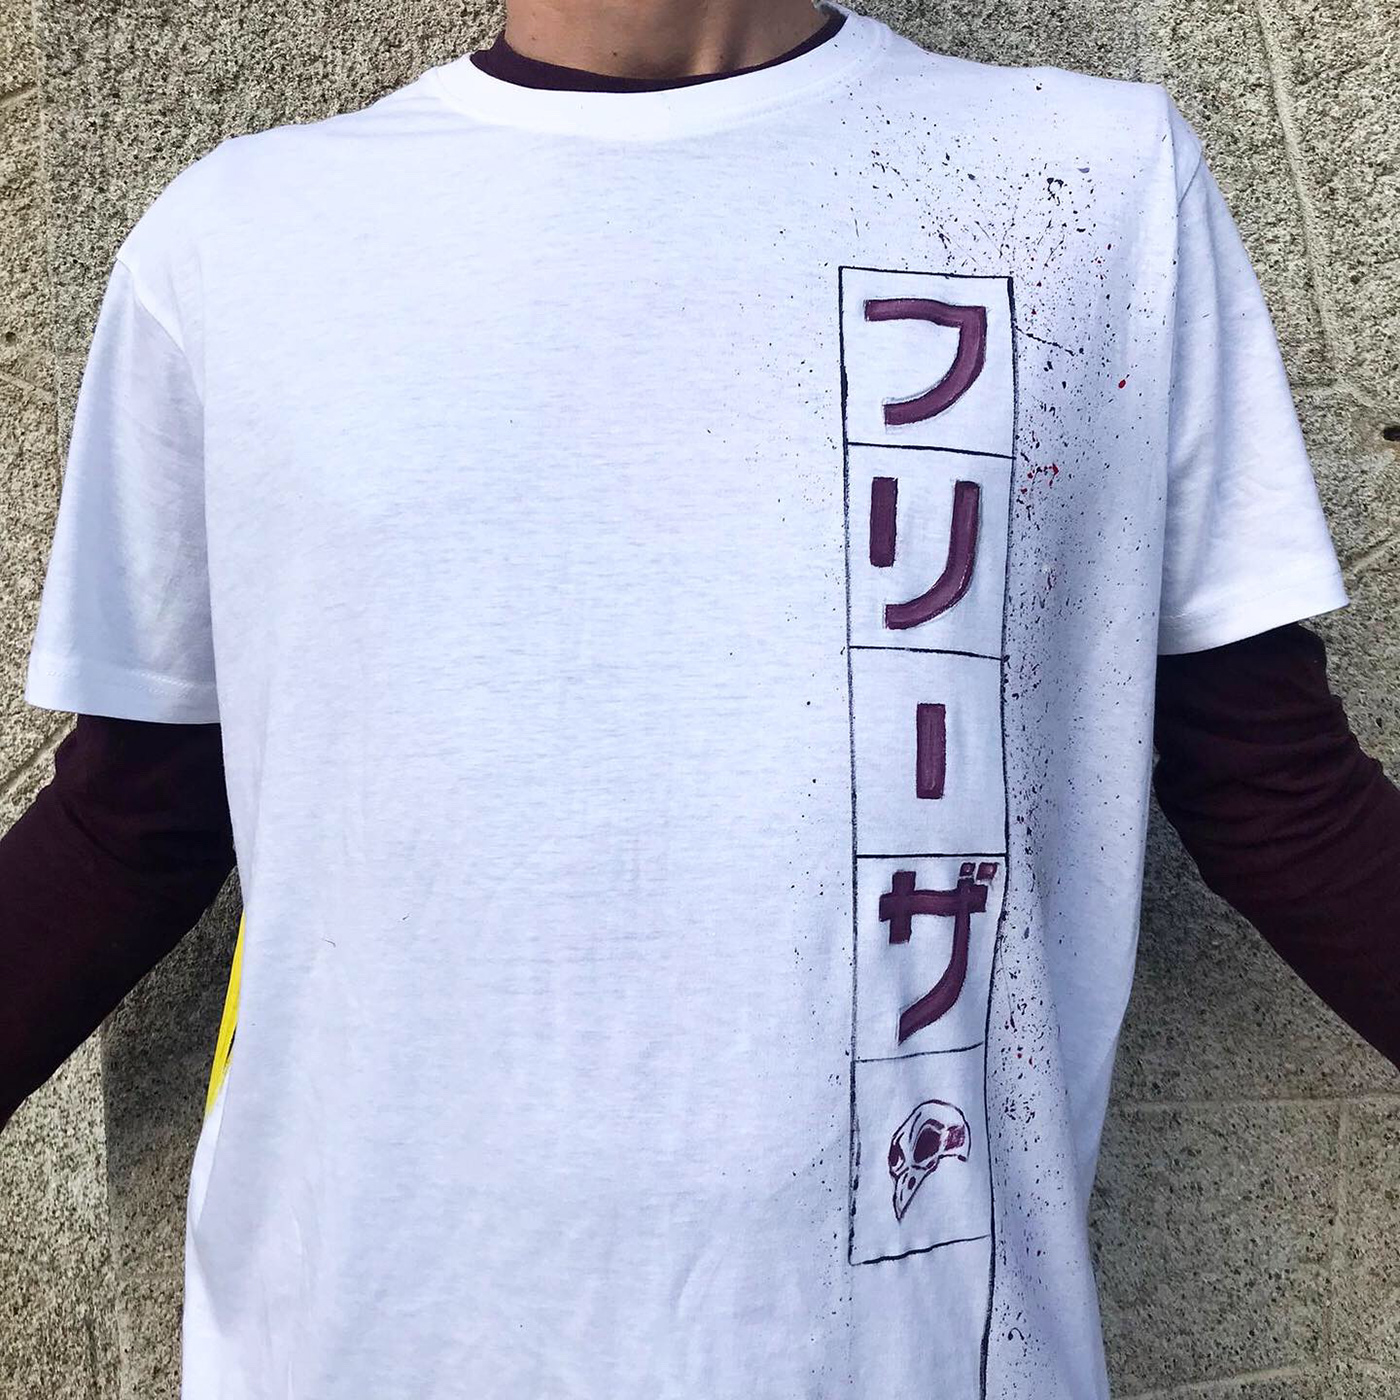 fanart manga tshirt